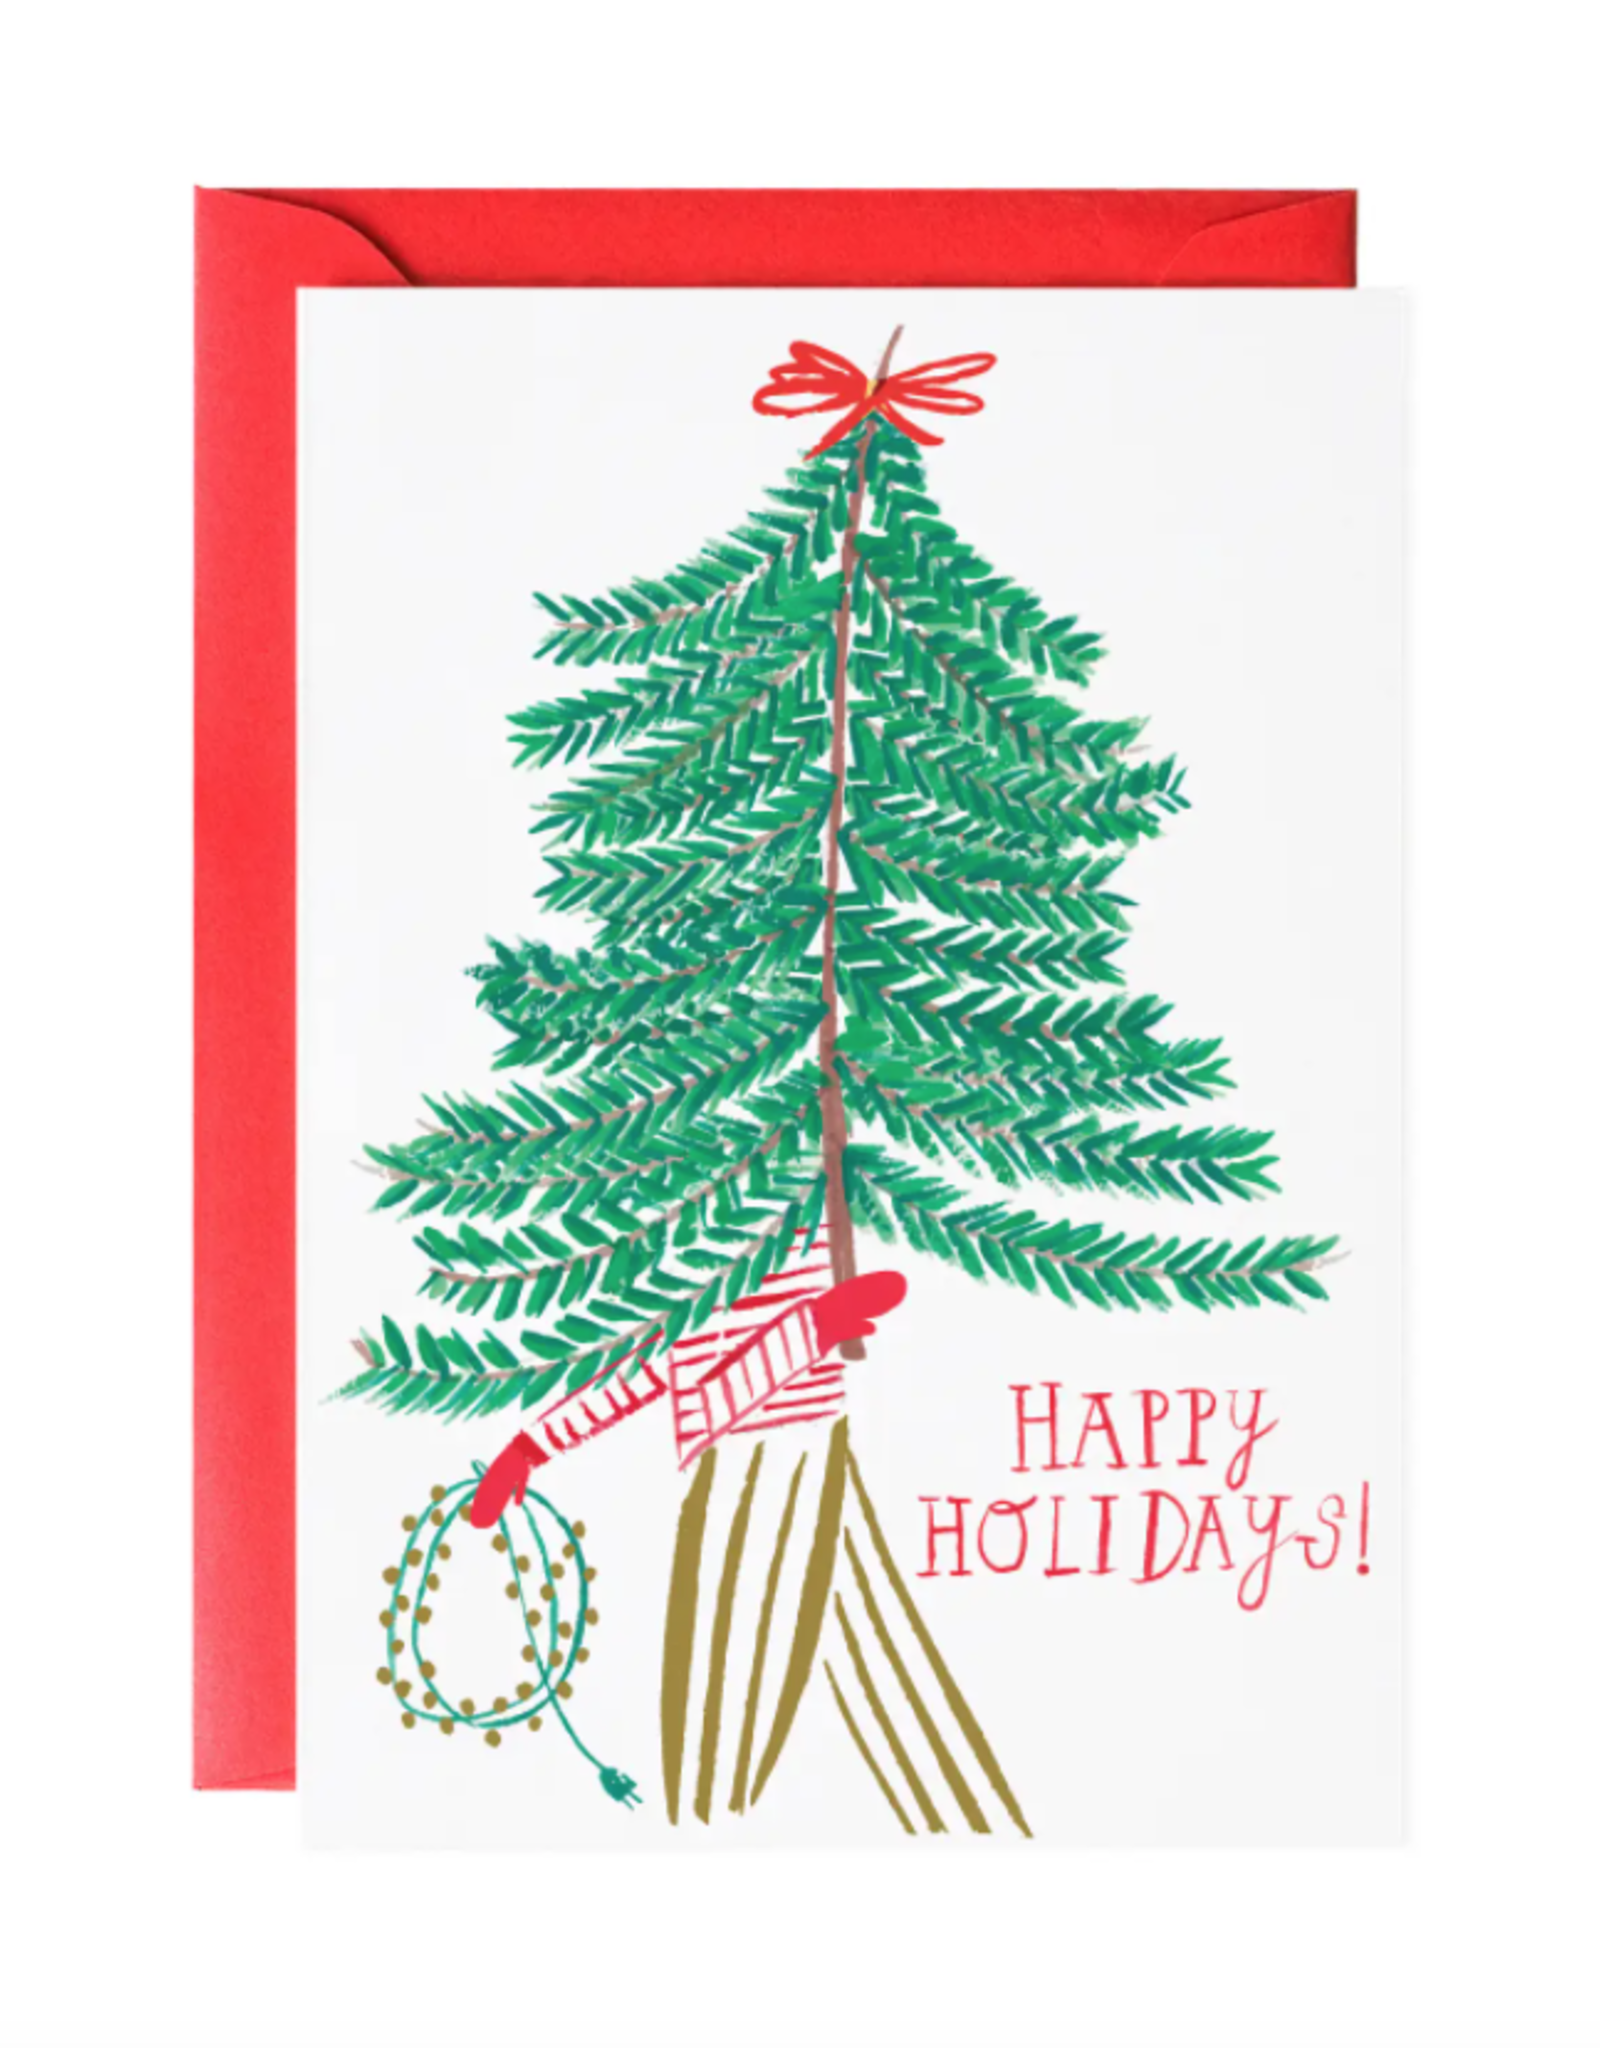 Charlie's Tree Holiday Greeting Card